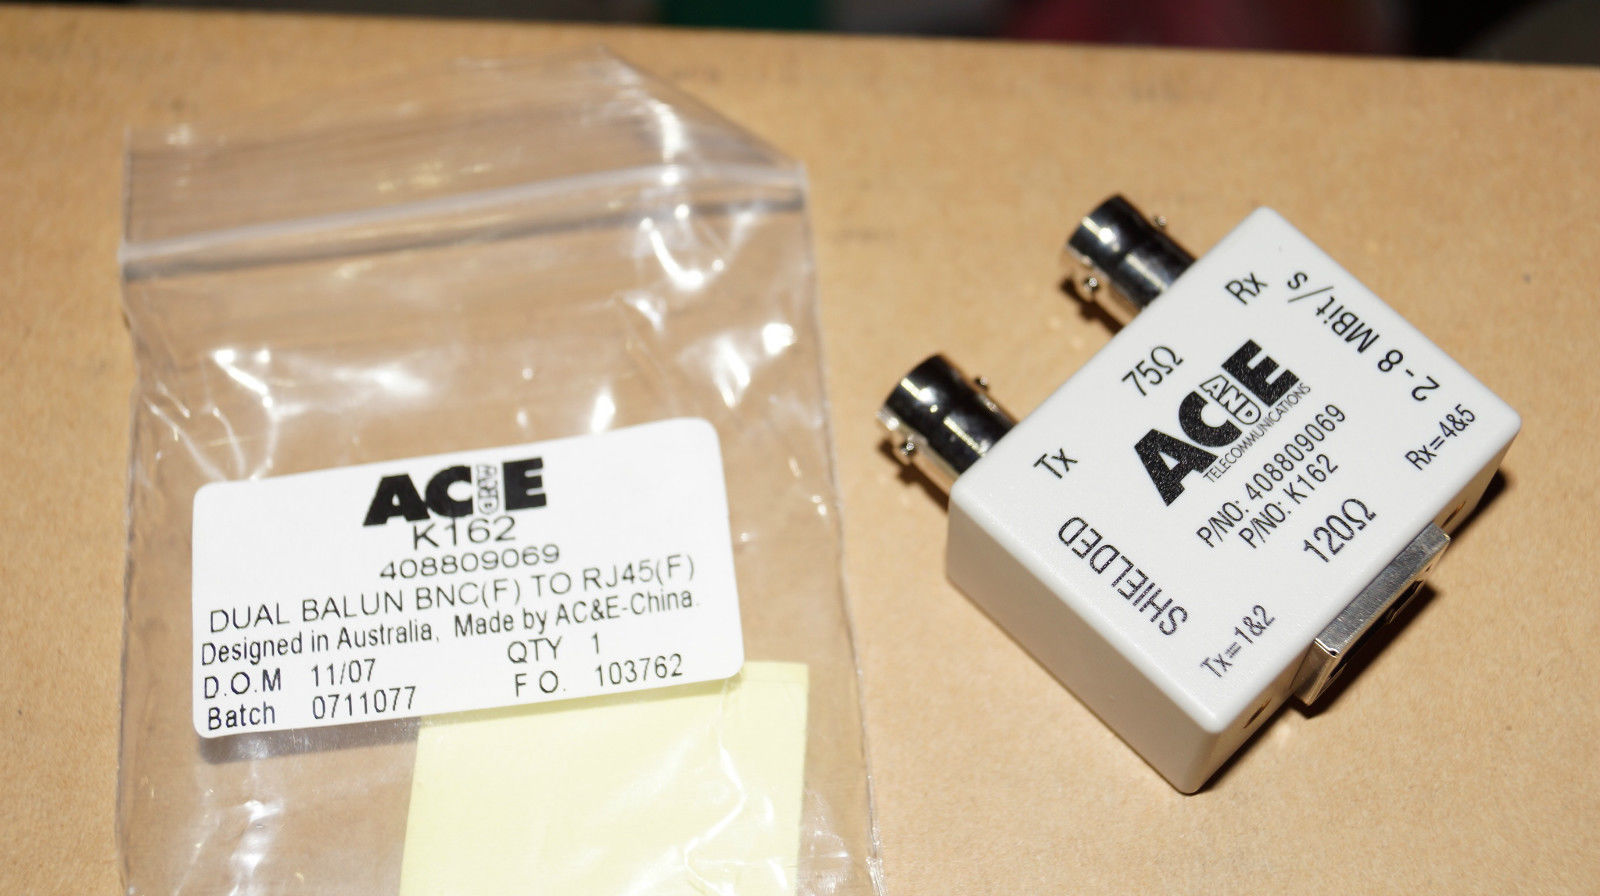 AC& E K162 / 408809069 Dual-BNC TO RJ45 ADAPTERS